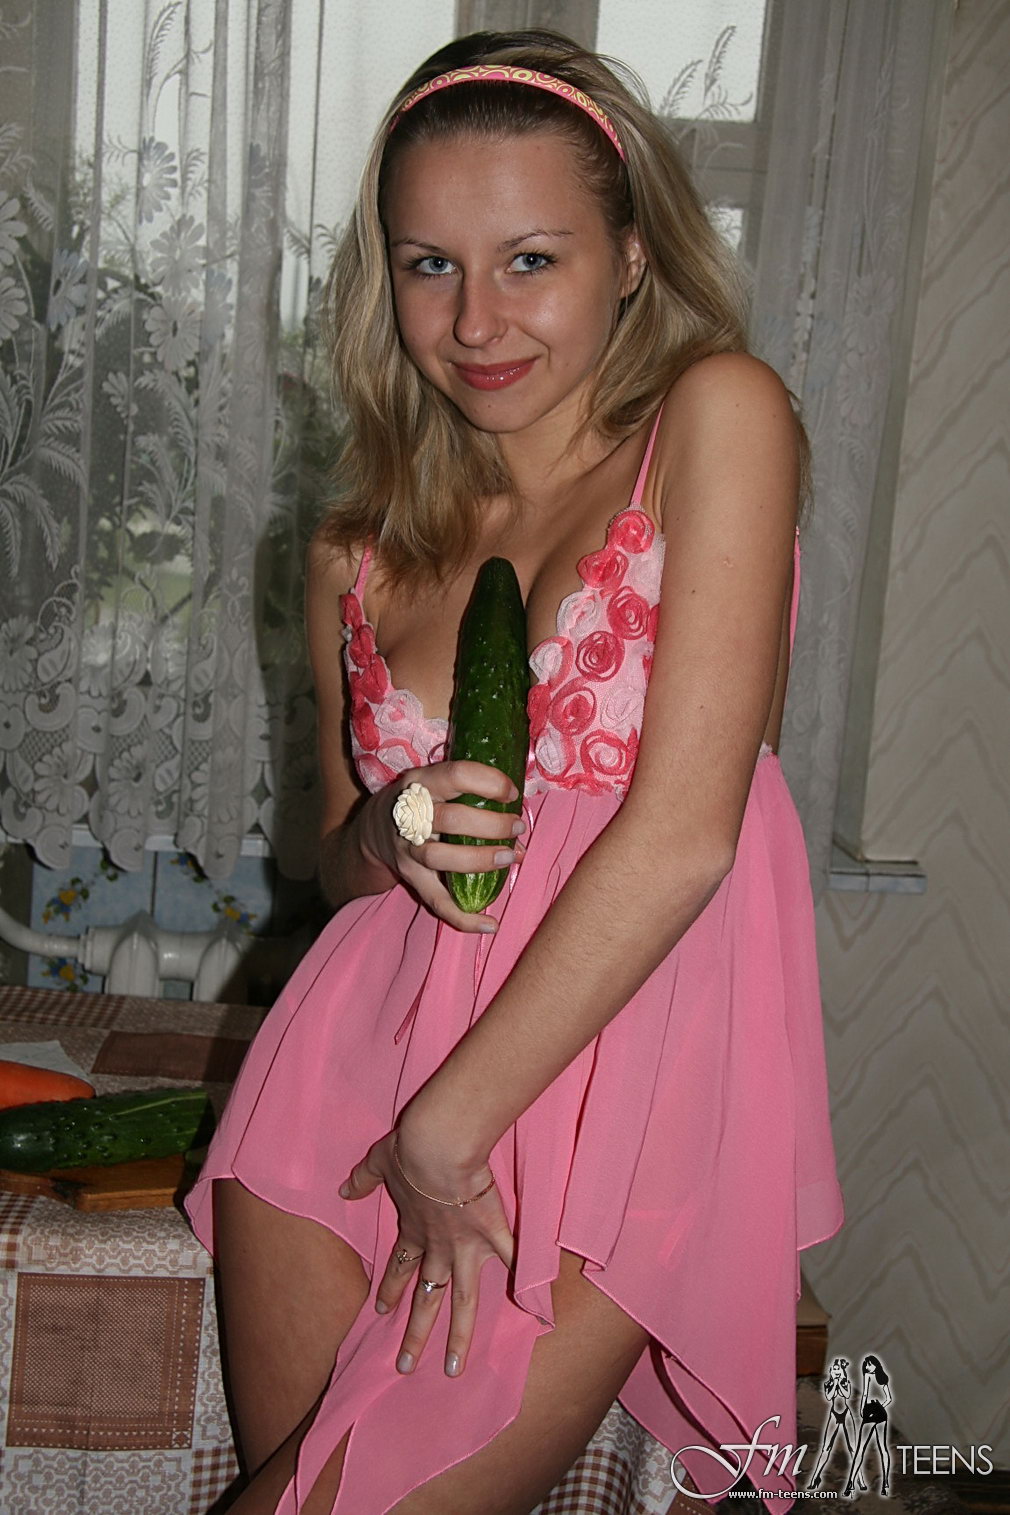 Cucumber » Nastya » FM Teens » Free Nude Pictures @ Bravo Erotica Free Nude Pictures